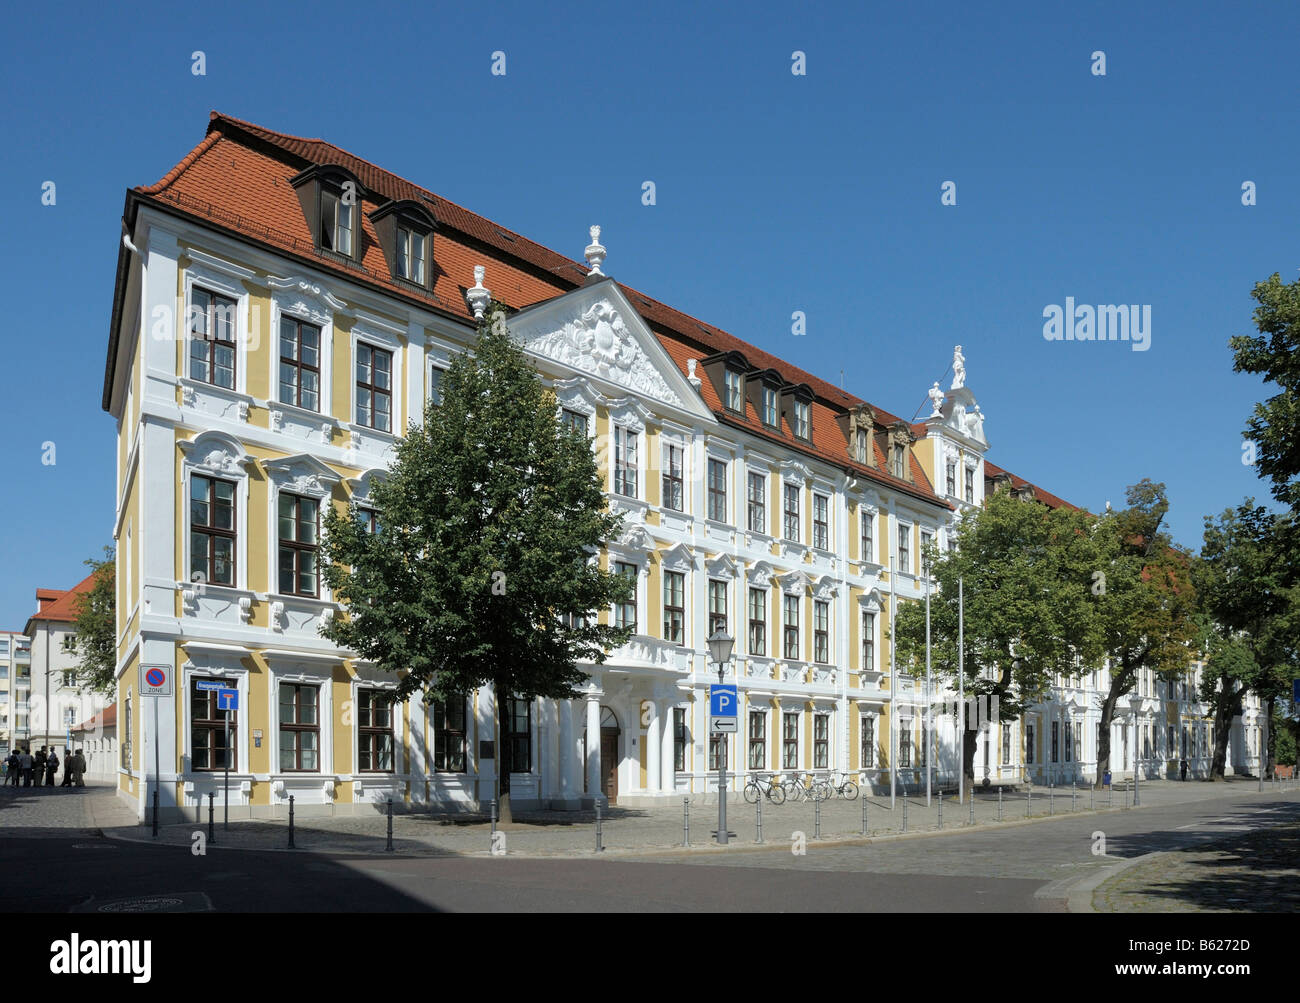 Historic town houses, Domplatz Square, Magdeburg, Saxony-Anhalt, Germany, Europe Stock Photo